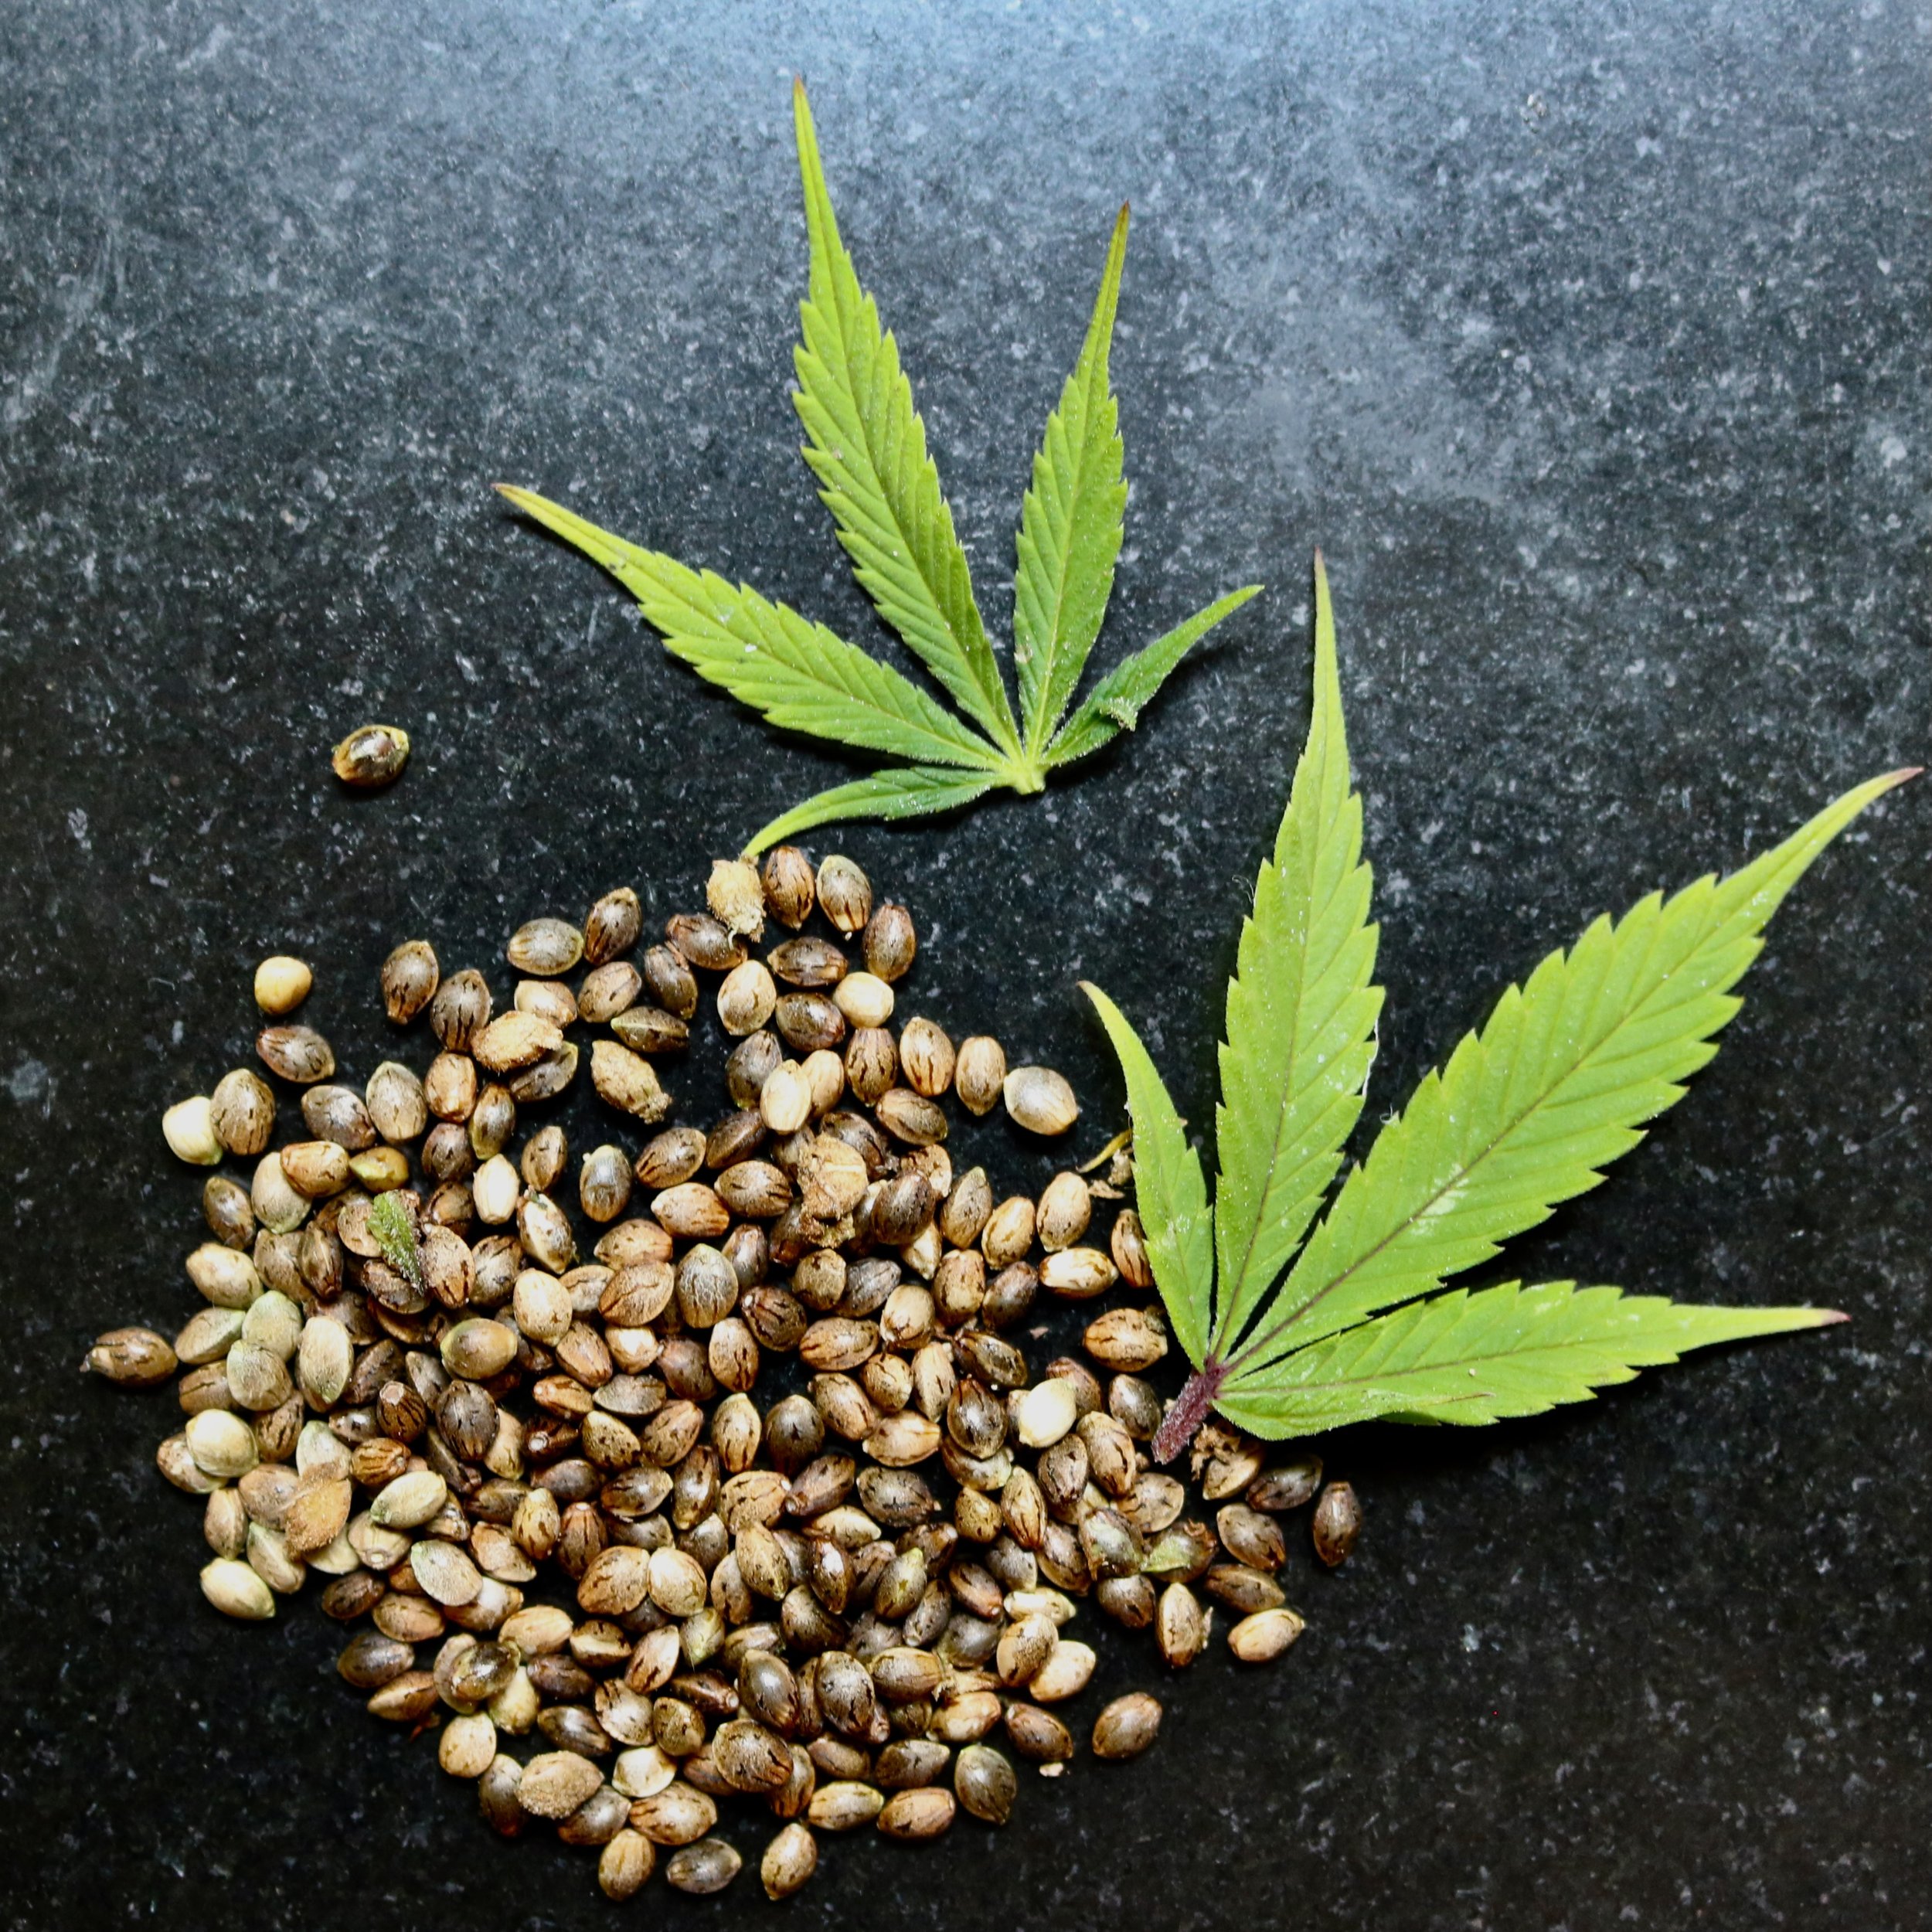 cannabis leaves and seeds.jpeg